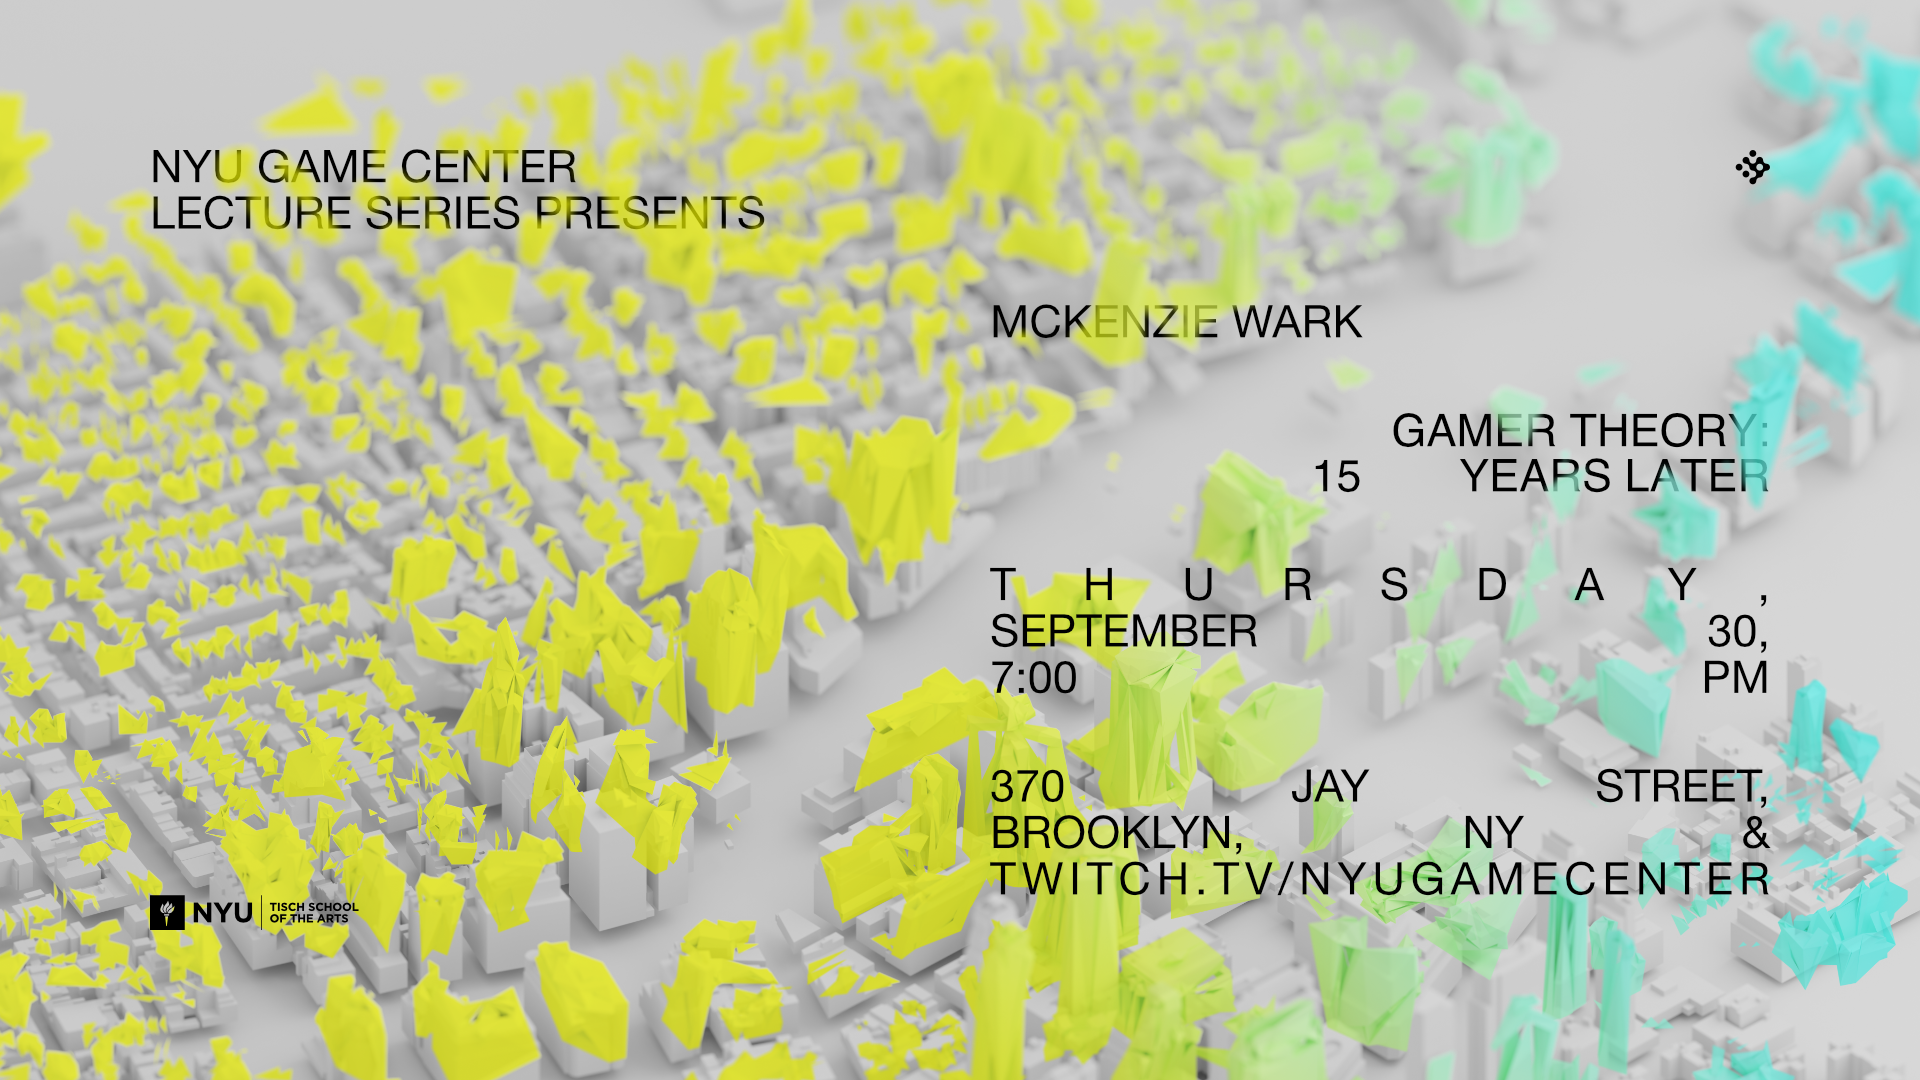 Poster for McKenzie Wark talk featuring abstract city 3D art.